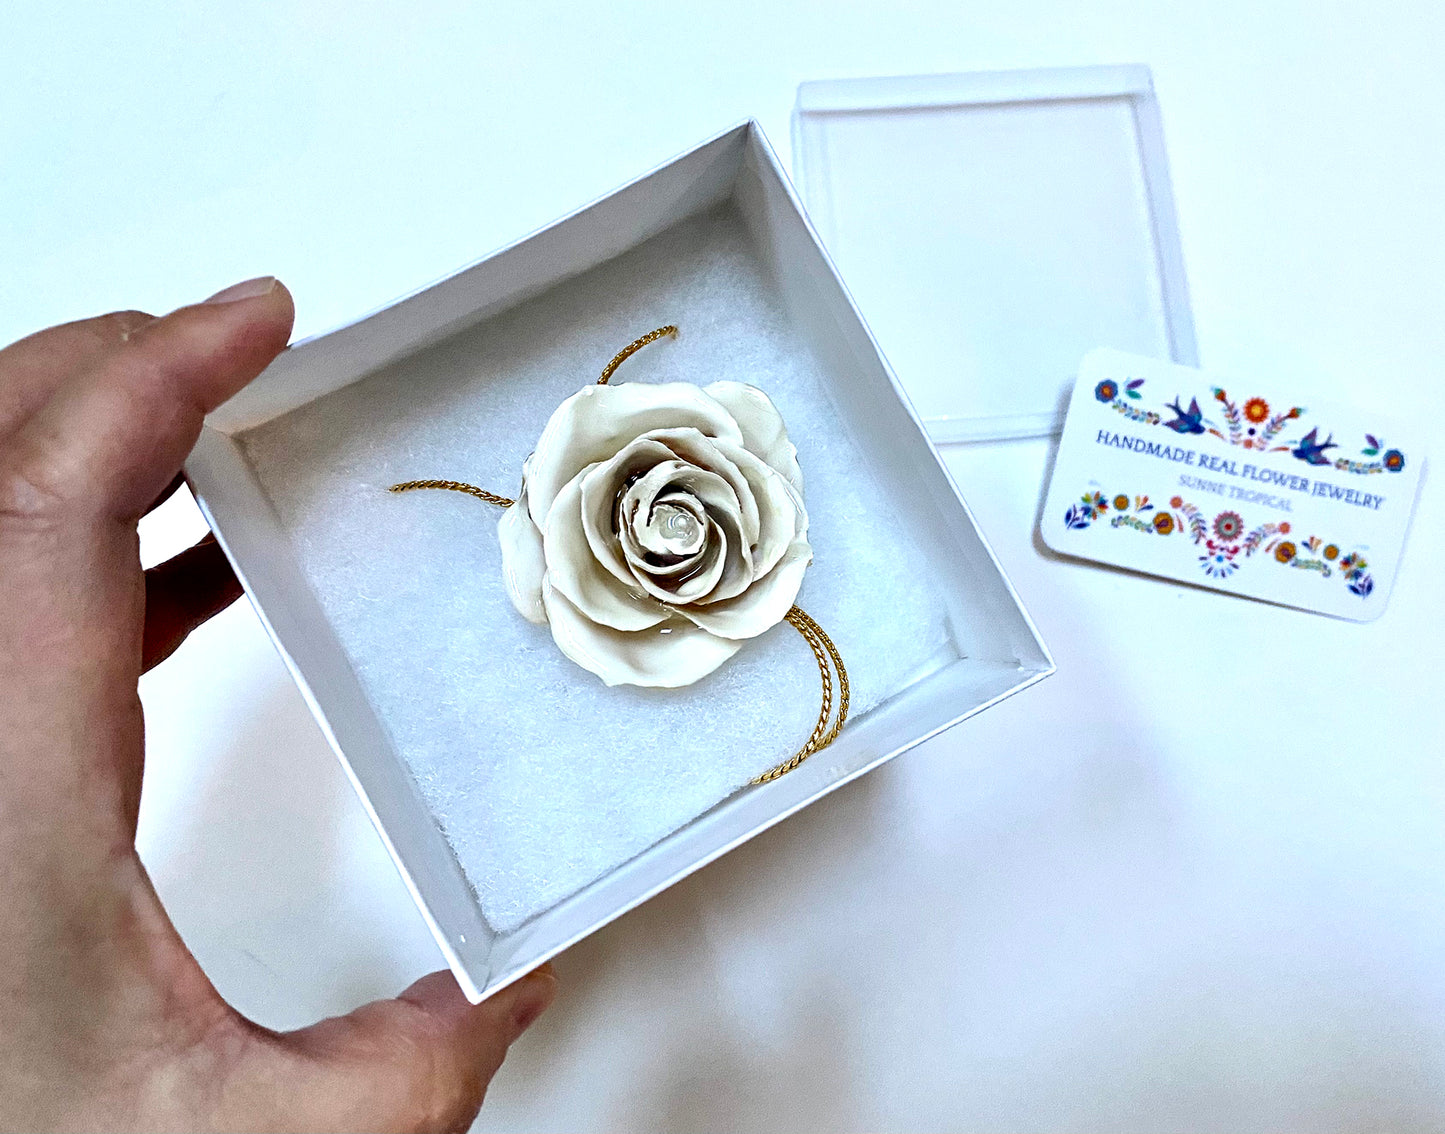 Mini Rose Mini 1.5-2.25 inch Pendant Necklace 18 inch Gold Plated 24K (Off White)